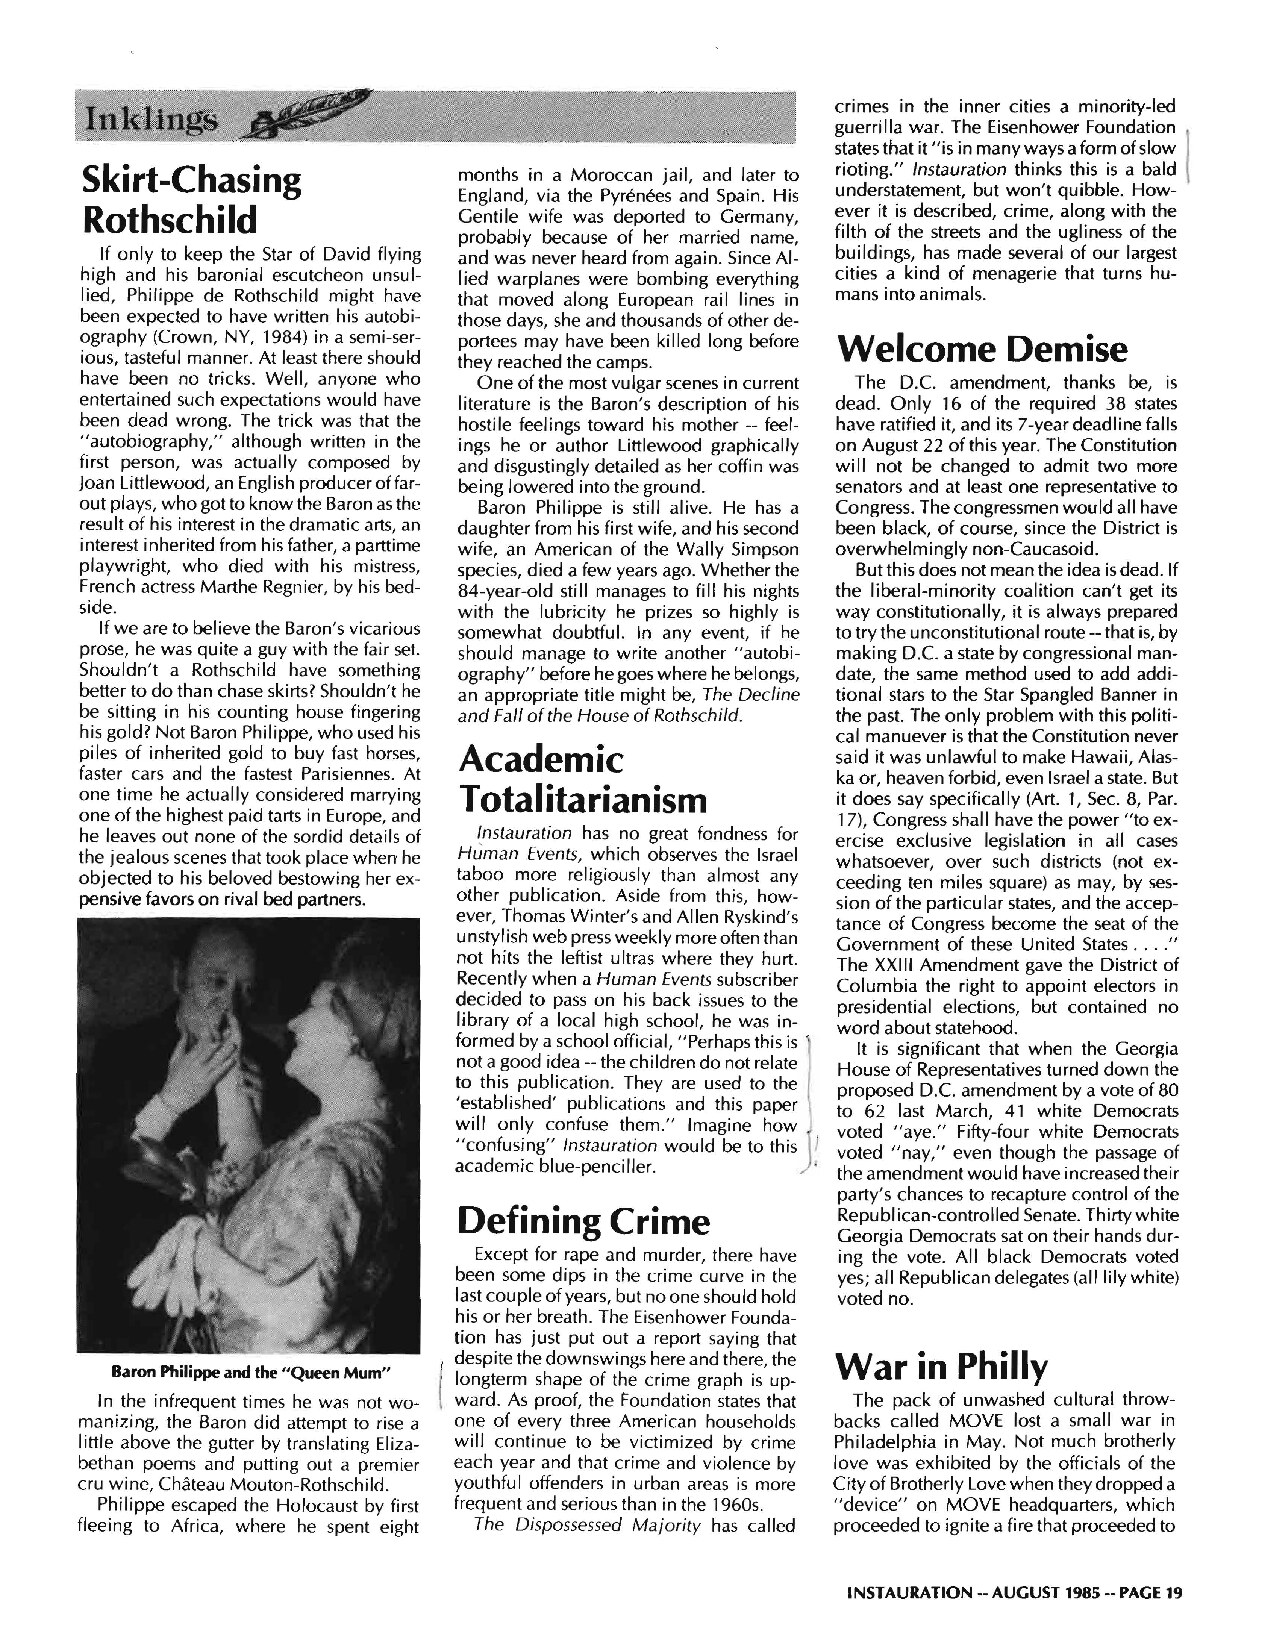 Instauration-1985-08-August-Vol10-No9-pt2